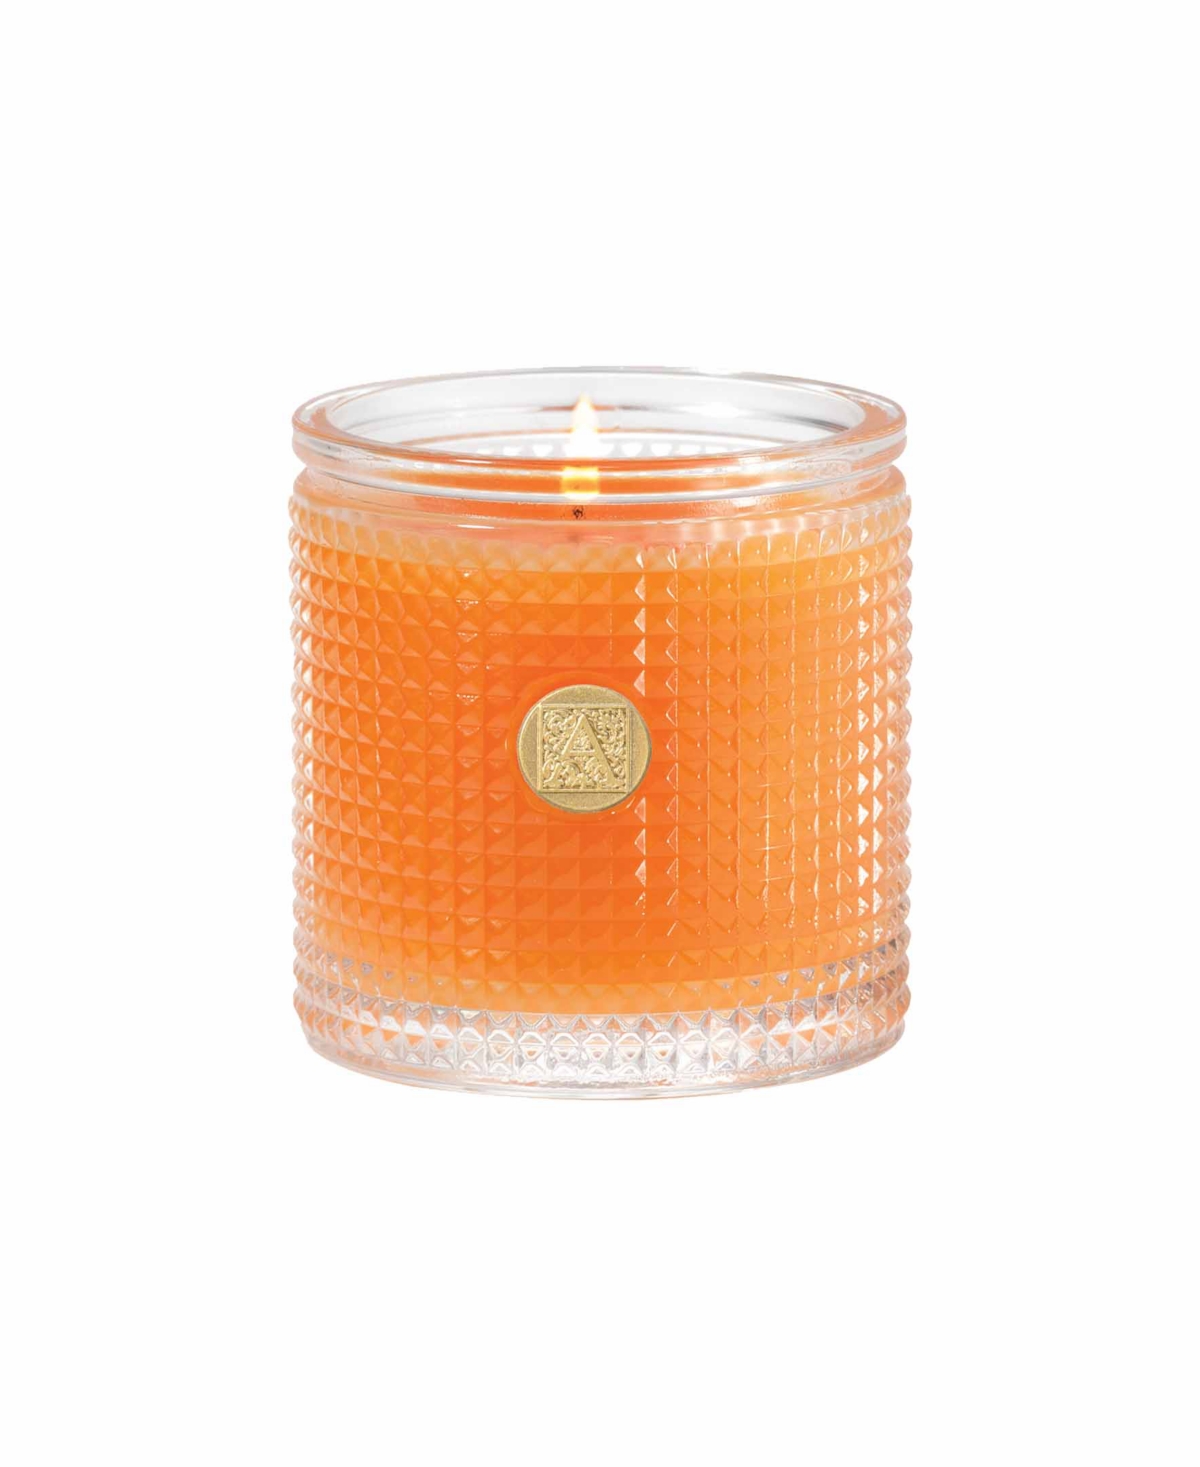 Aromatique Valencia Orange Textured Candle